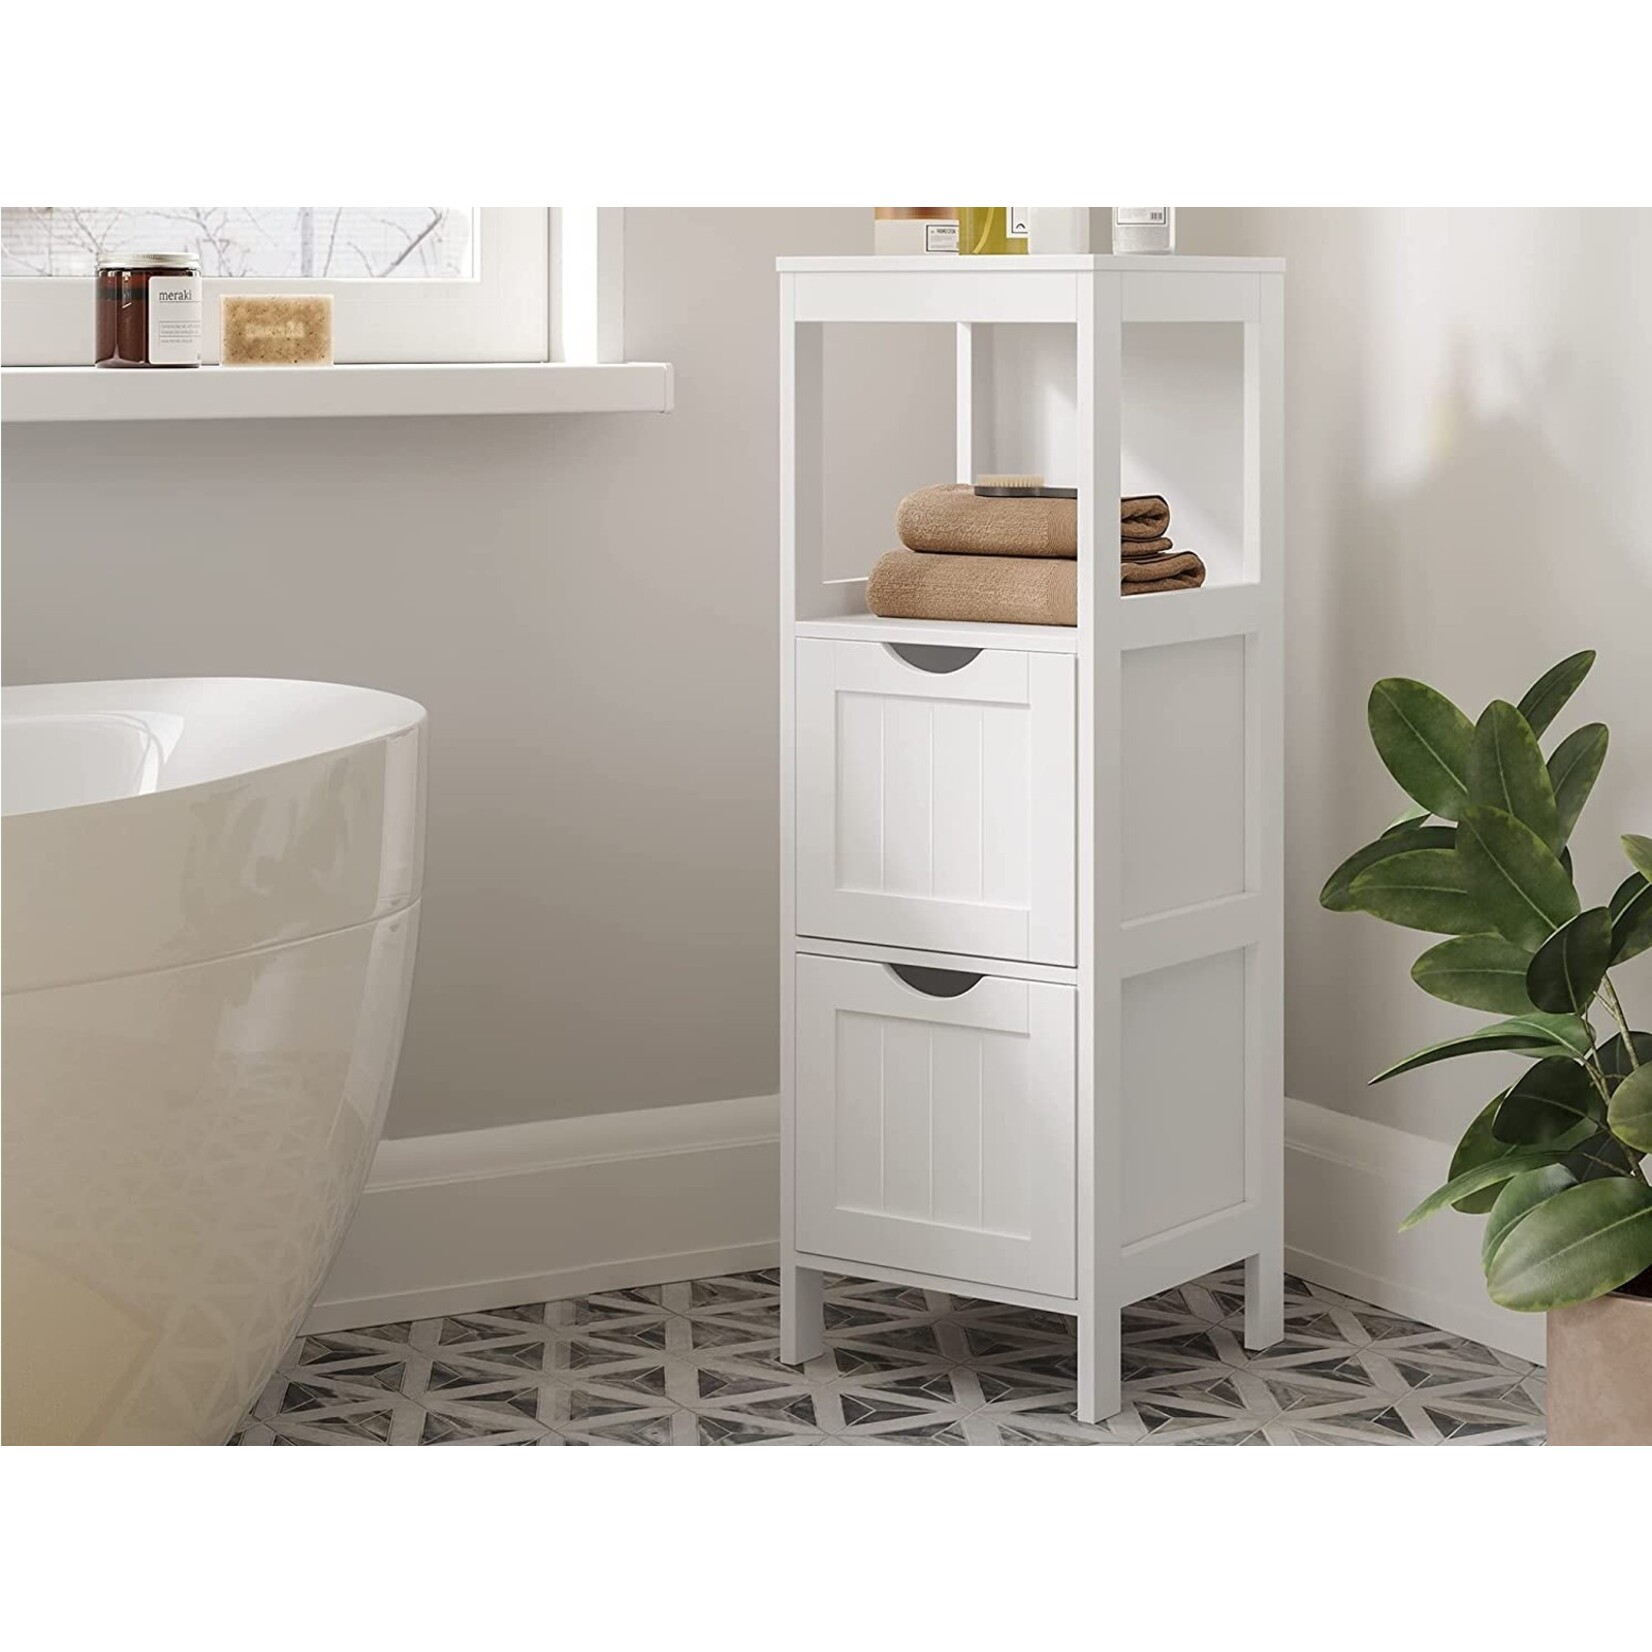 Bobbel Home Dok Home - Bathroom cabinet - Medicine cabinet - 2 drawers - 1 open surface - Wood - White